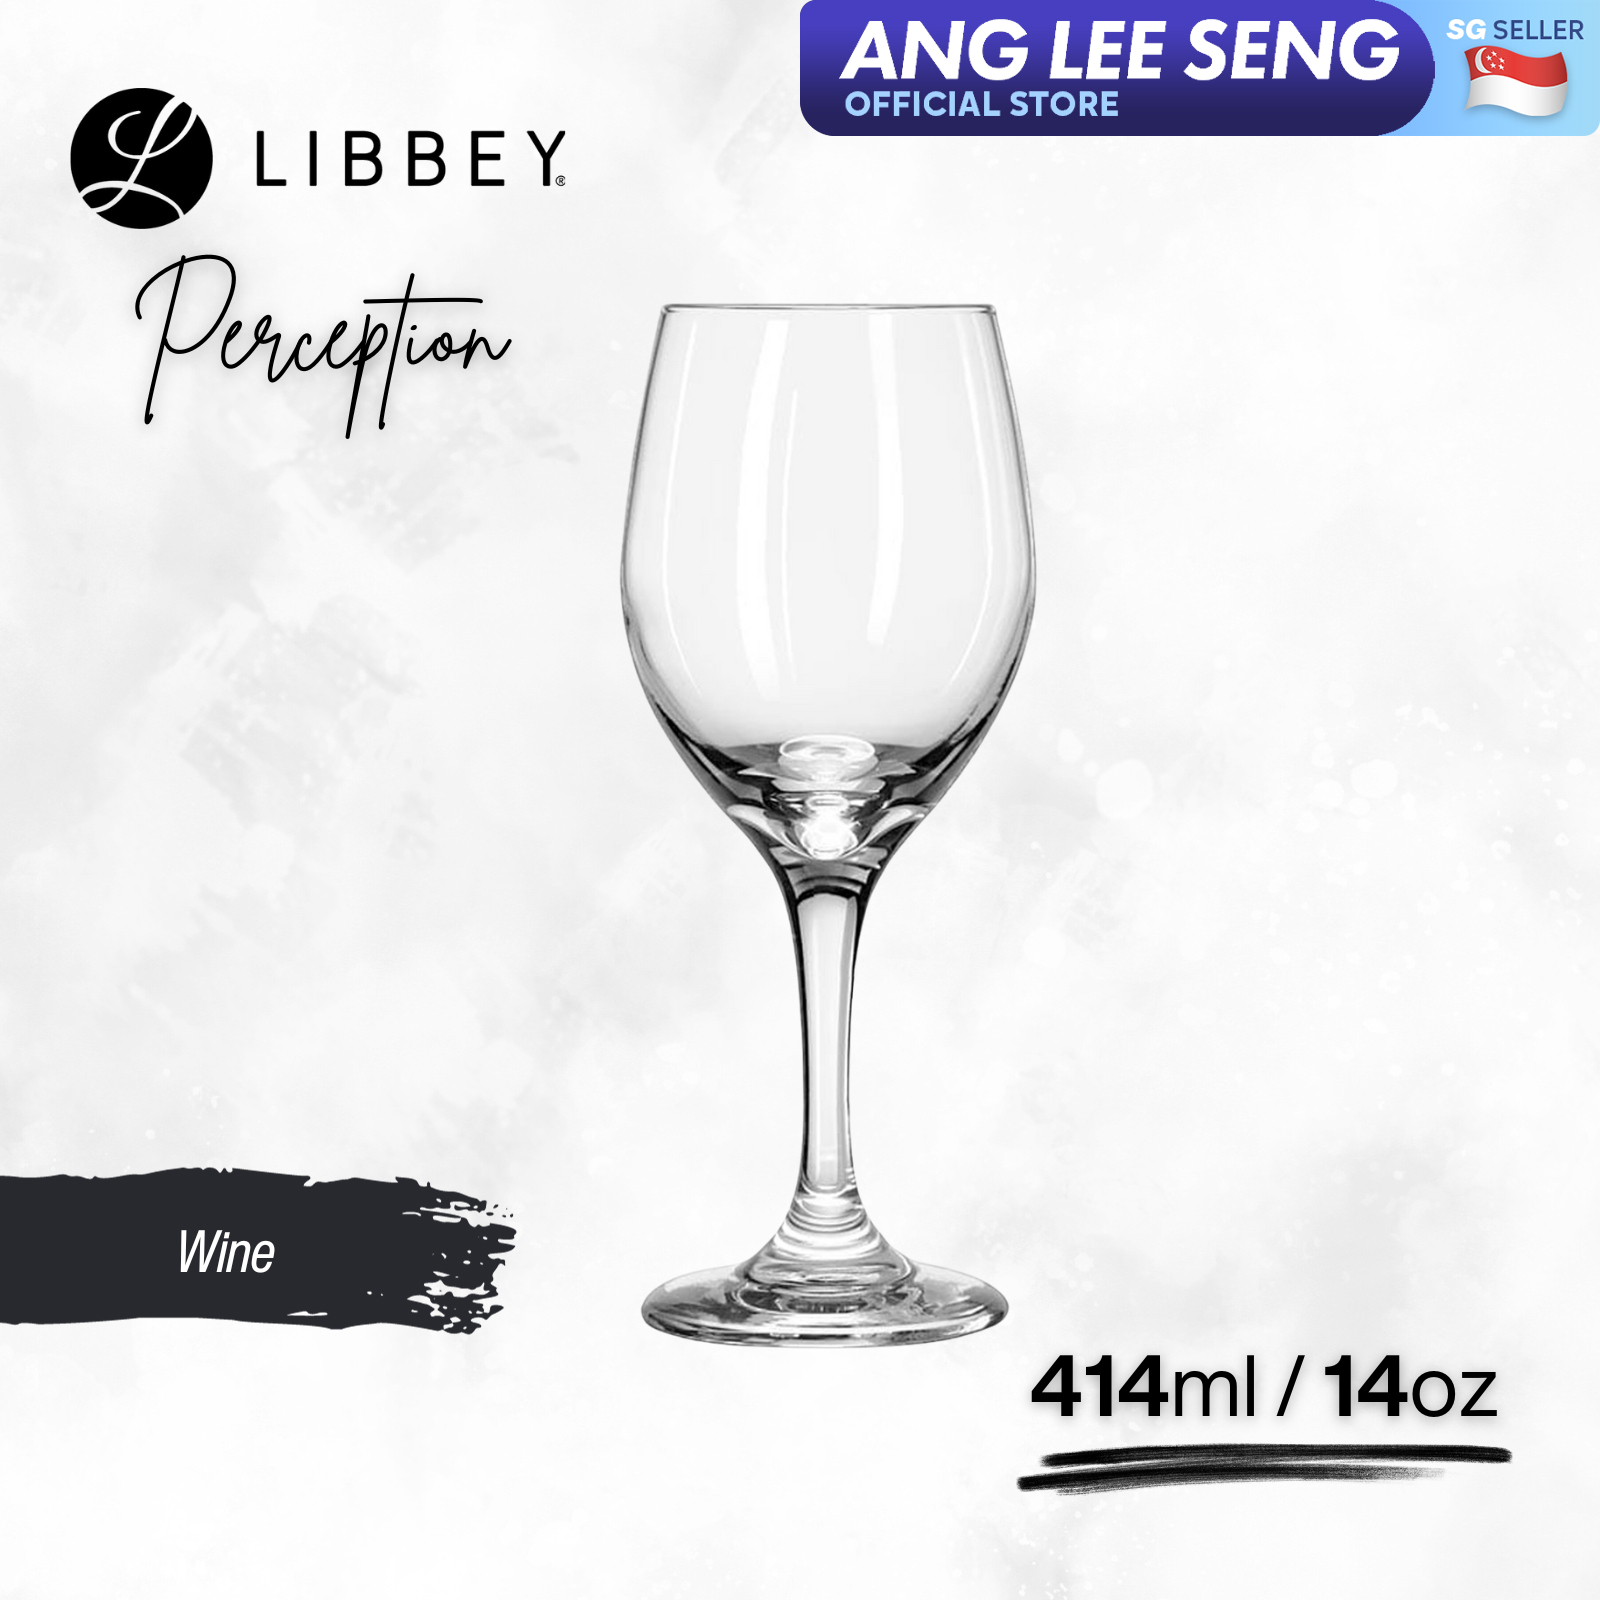 Libbey Perception 3011 Wine Glass 414ml/14oz, 2-pc/6-pc Set